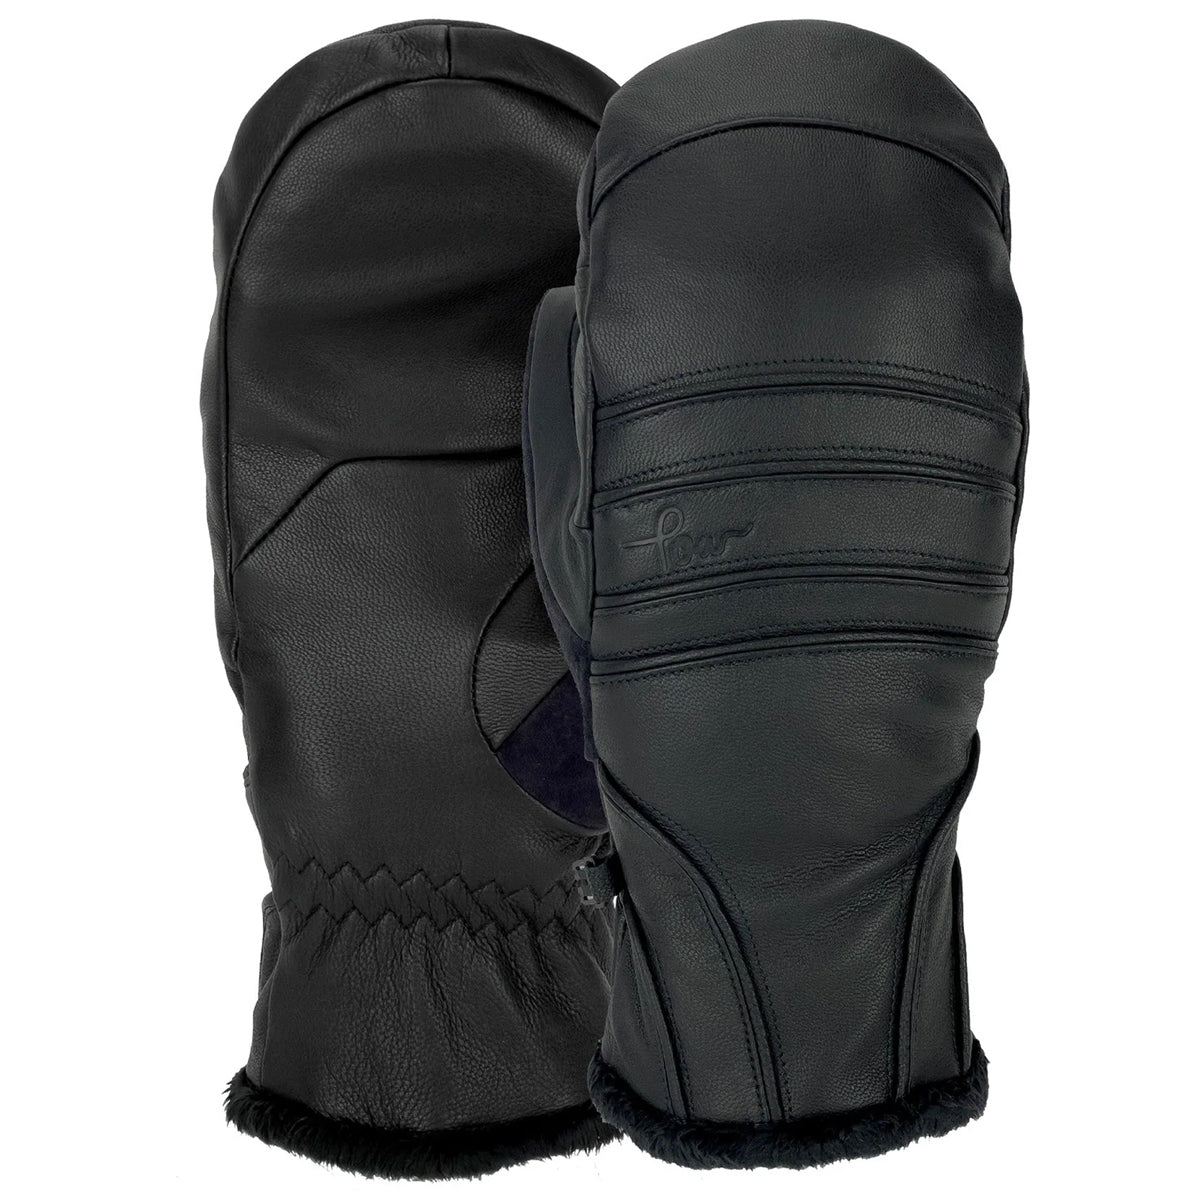 POW Womens Revival Mitt Snowboard Gloves - Black image 1